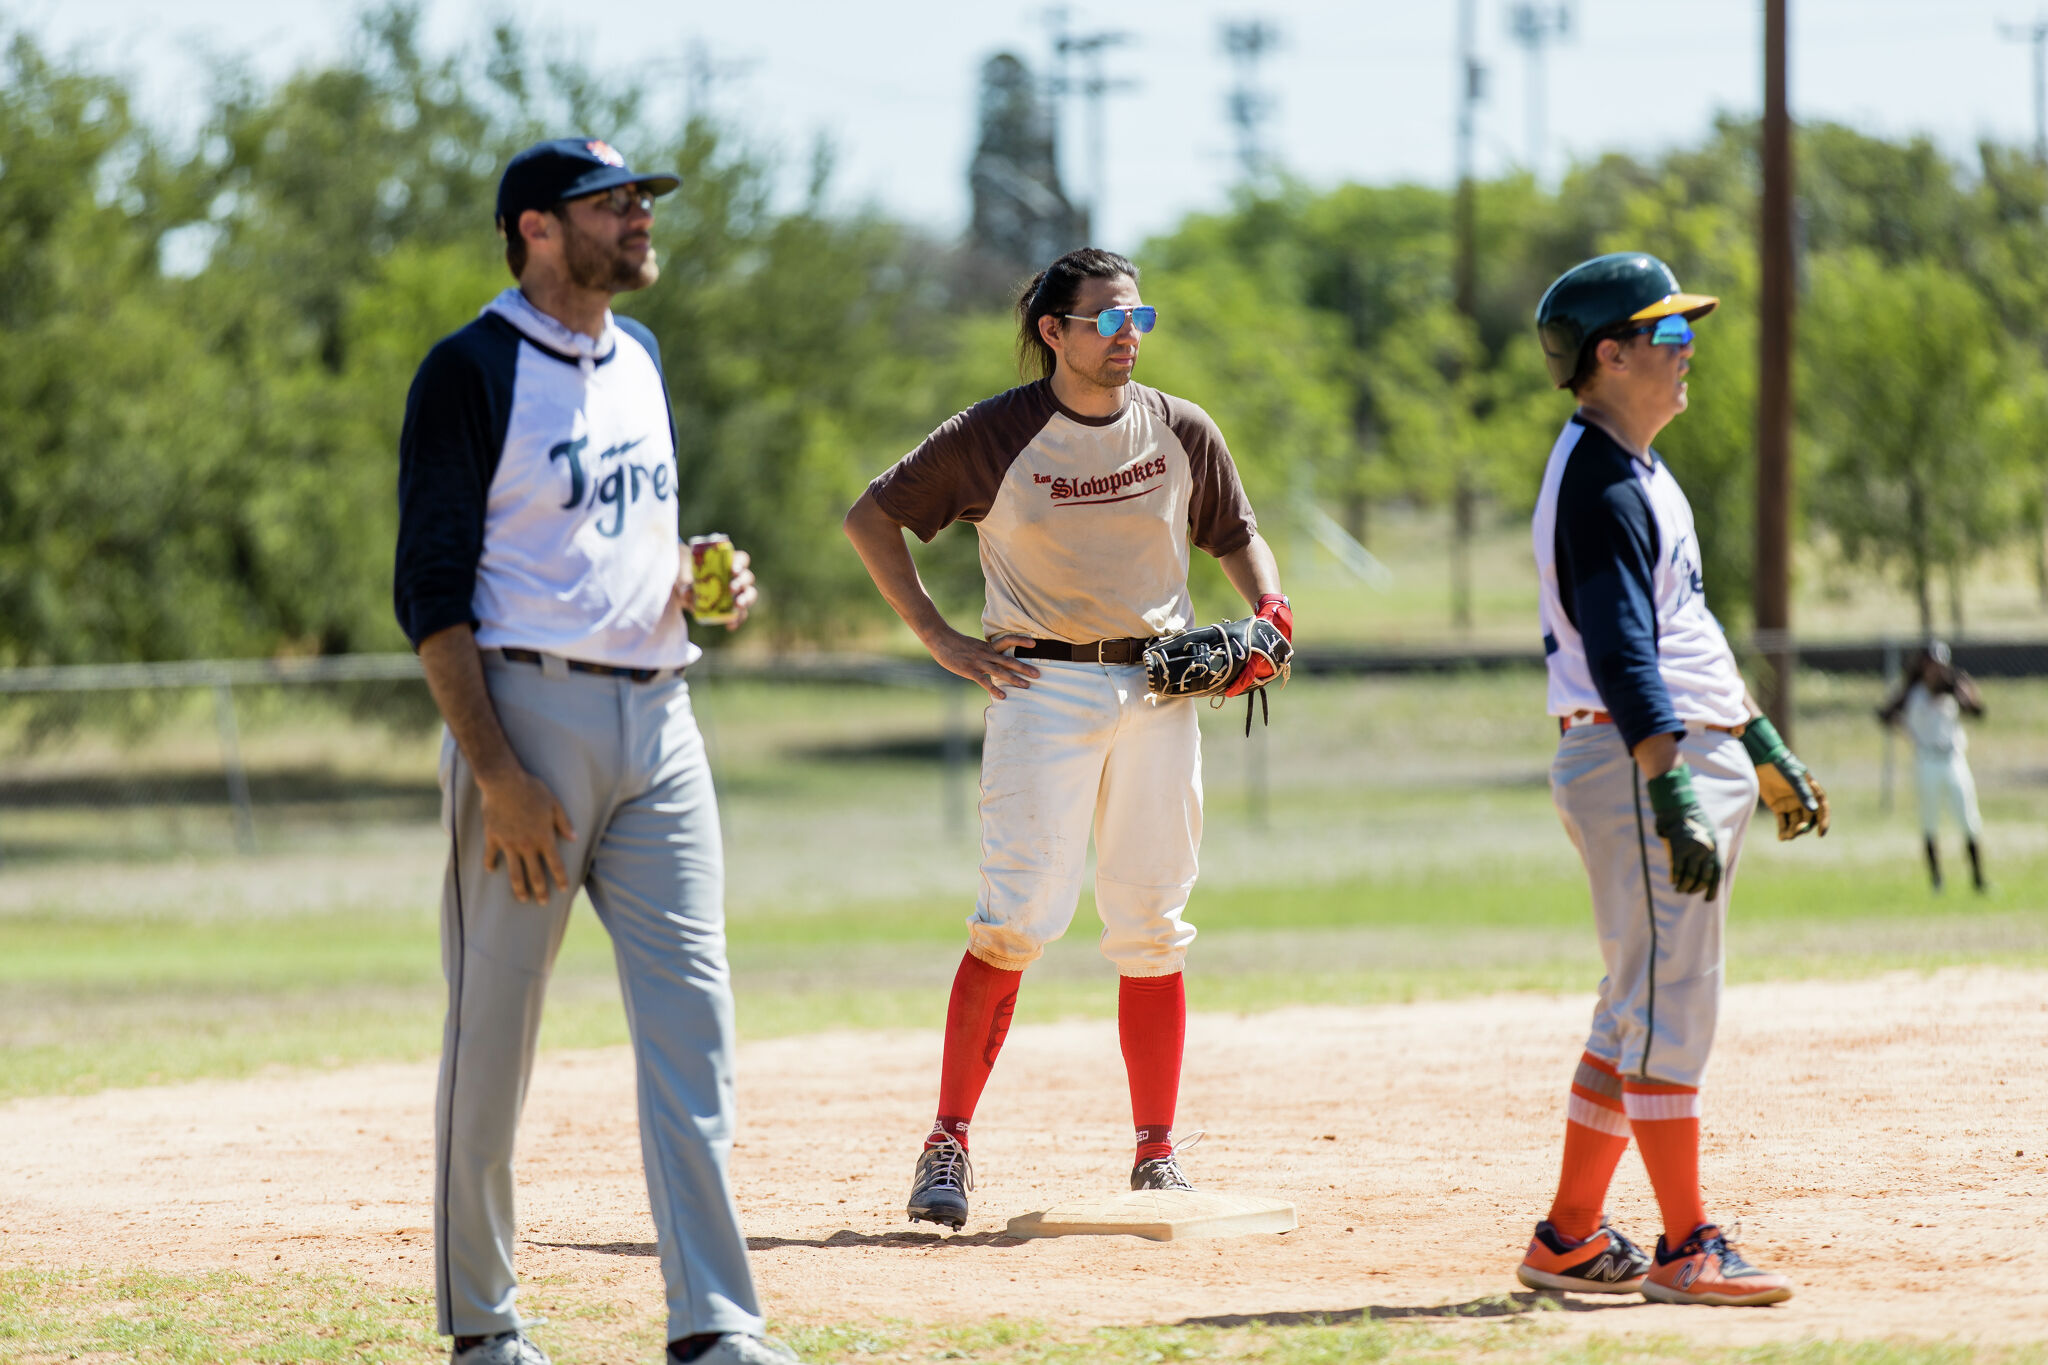 Sandlot baseball is about fun and community, not skill or winning : NPR